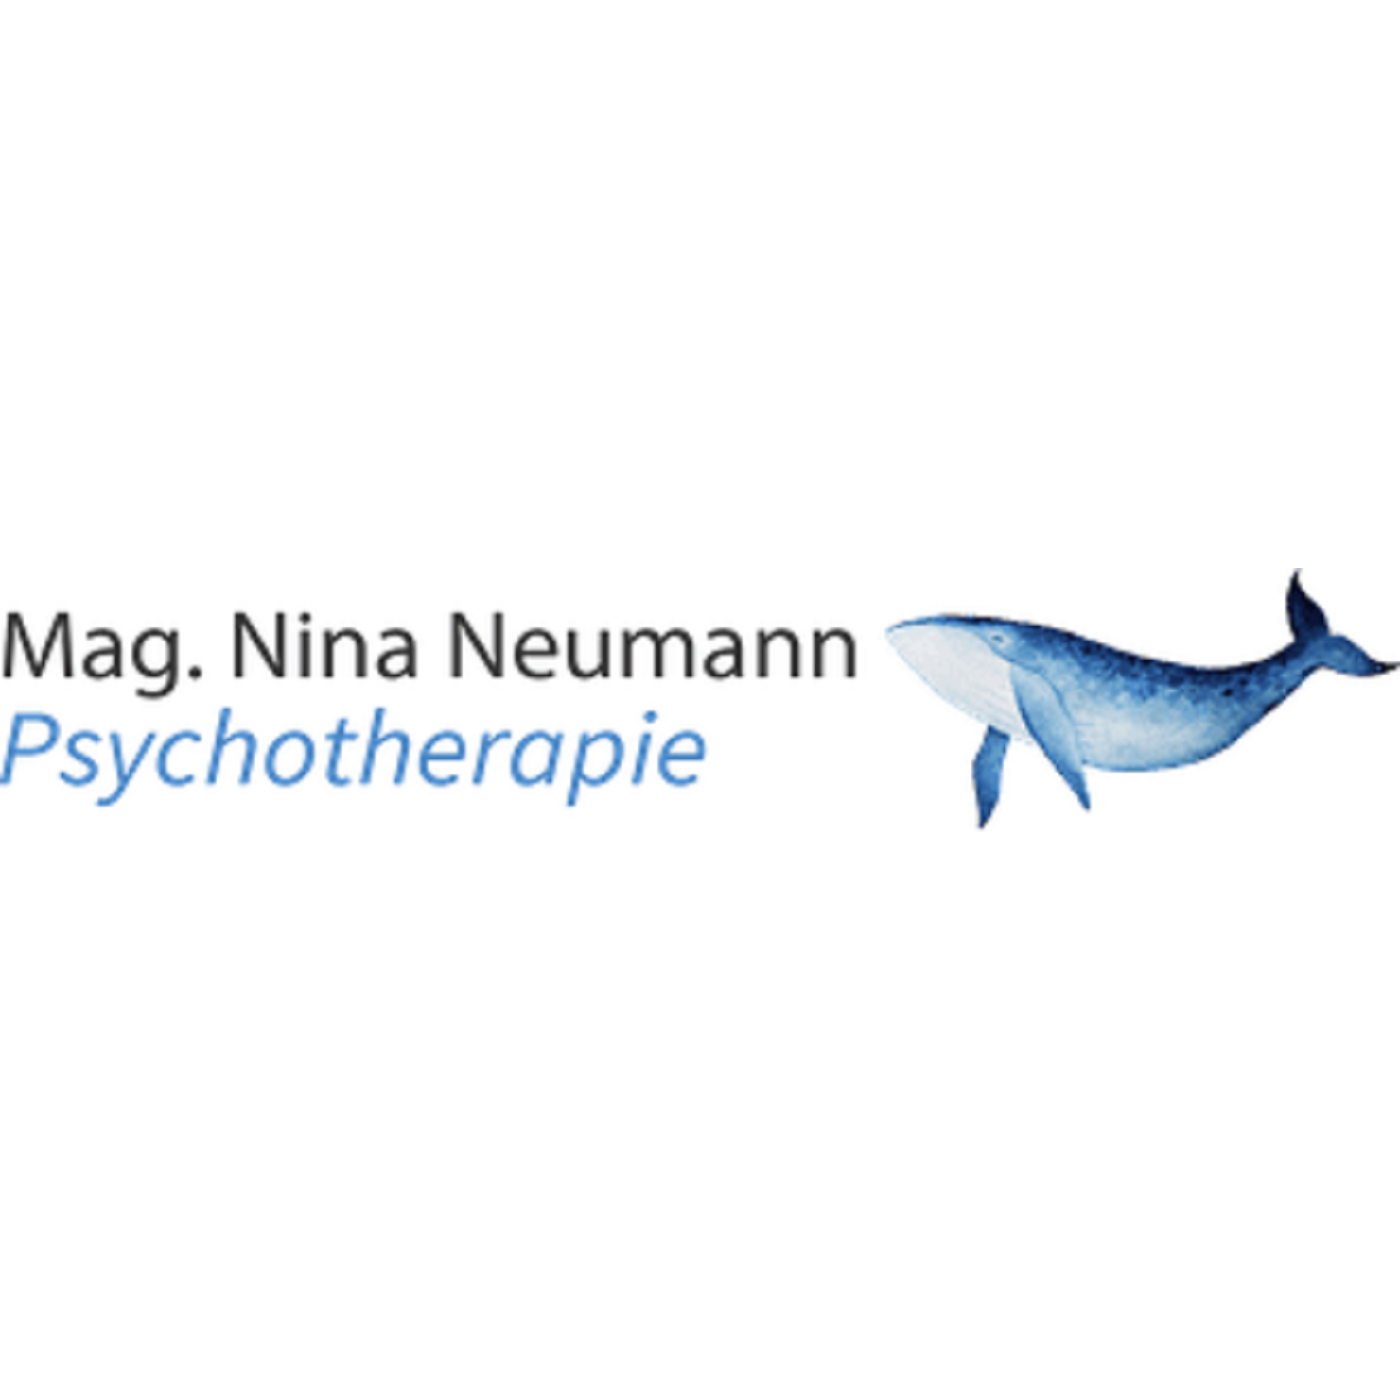 Mag. Nina Neumann, Psychotherapie, Sexualtherapie, Traumatherapie Logo